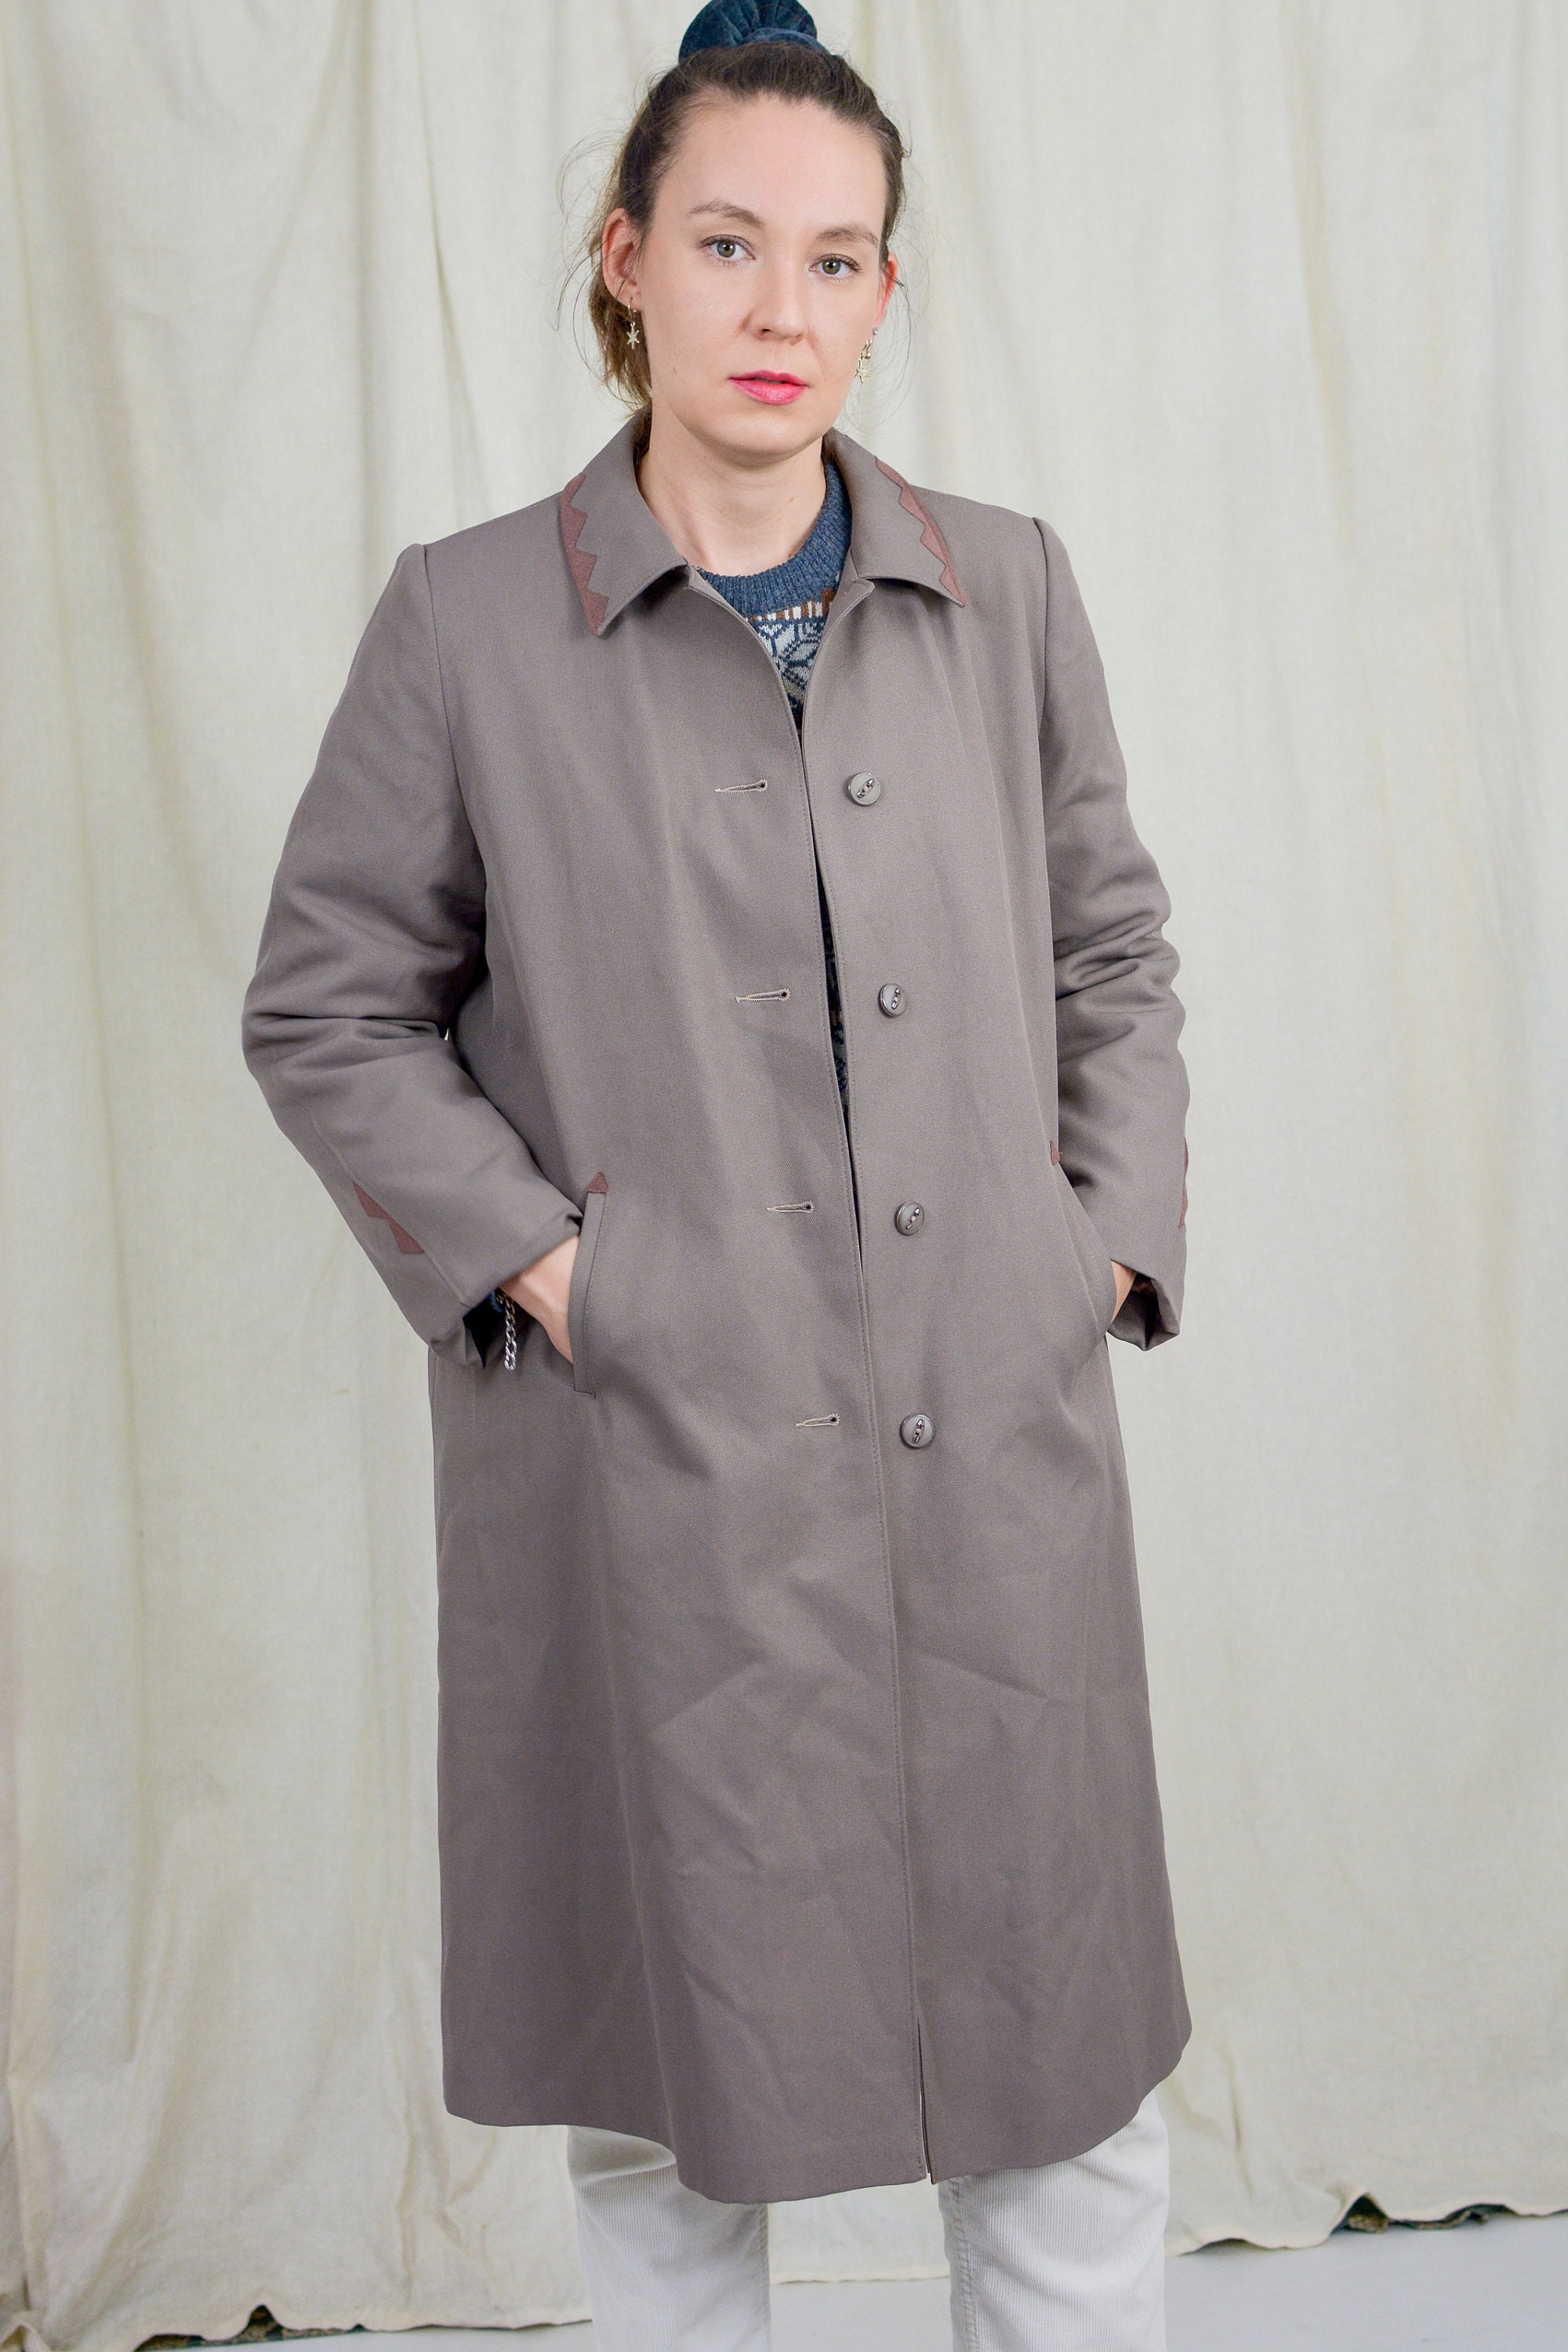 Dannimac trench vintage women gray coat lined spring coat | Etsy